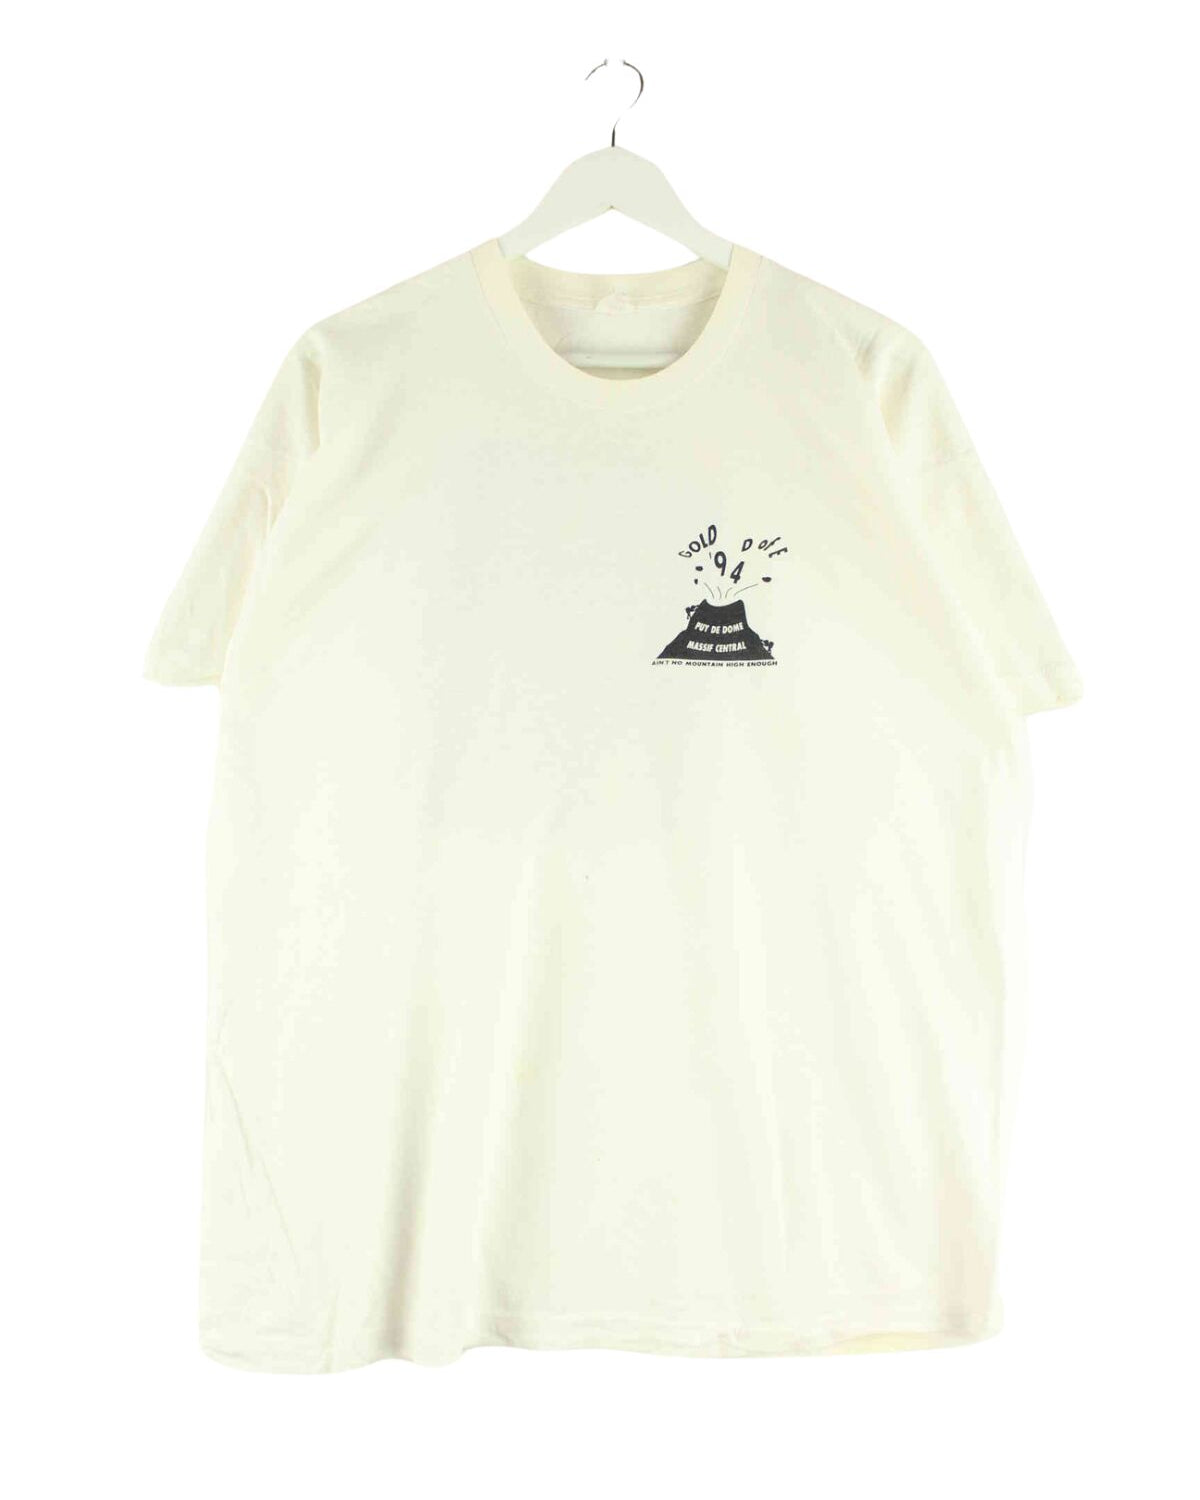 Vintage 1994 Expedition Print Single Stitched T-Shirt Beige L (front image)